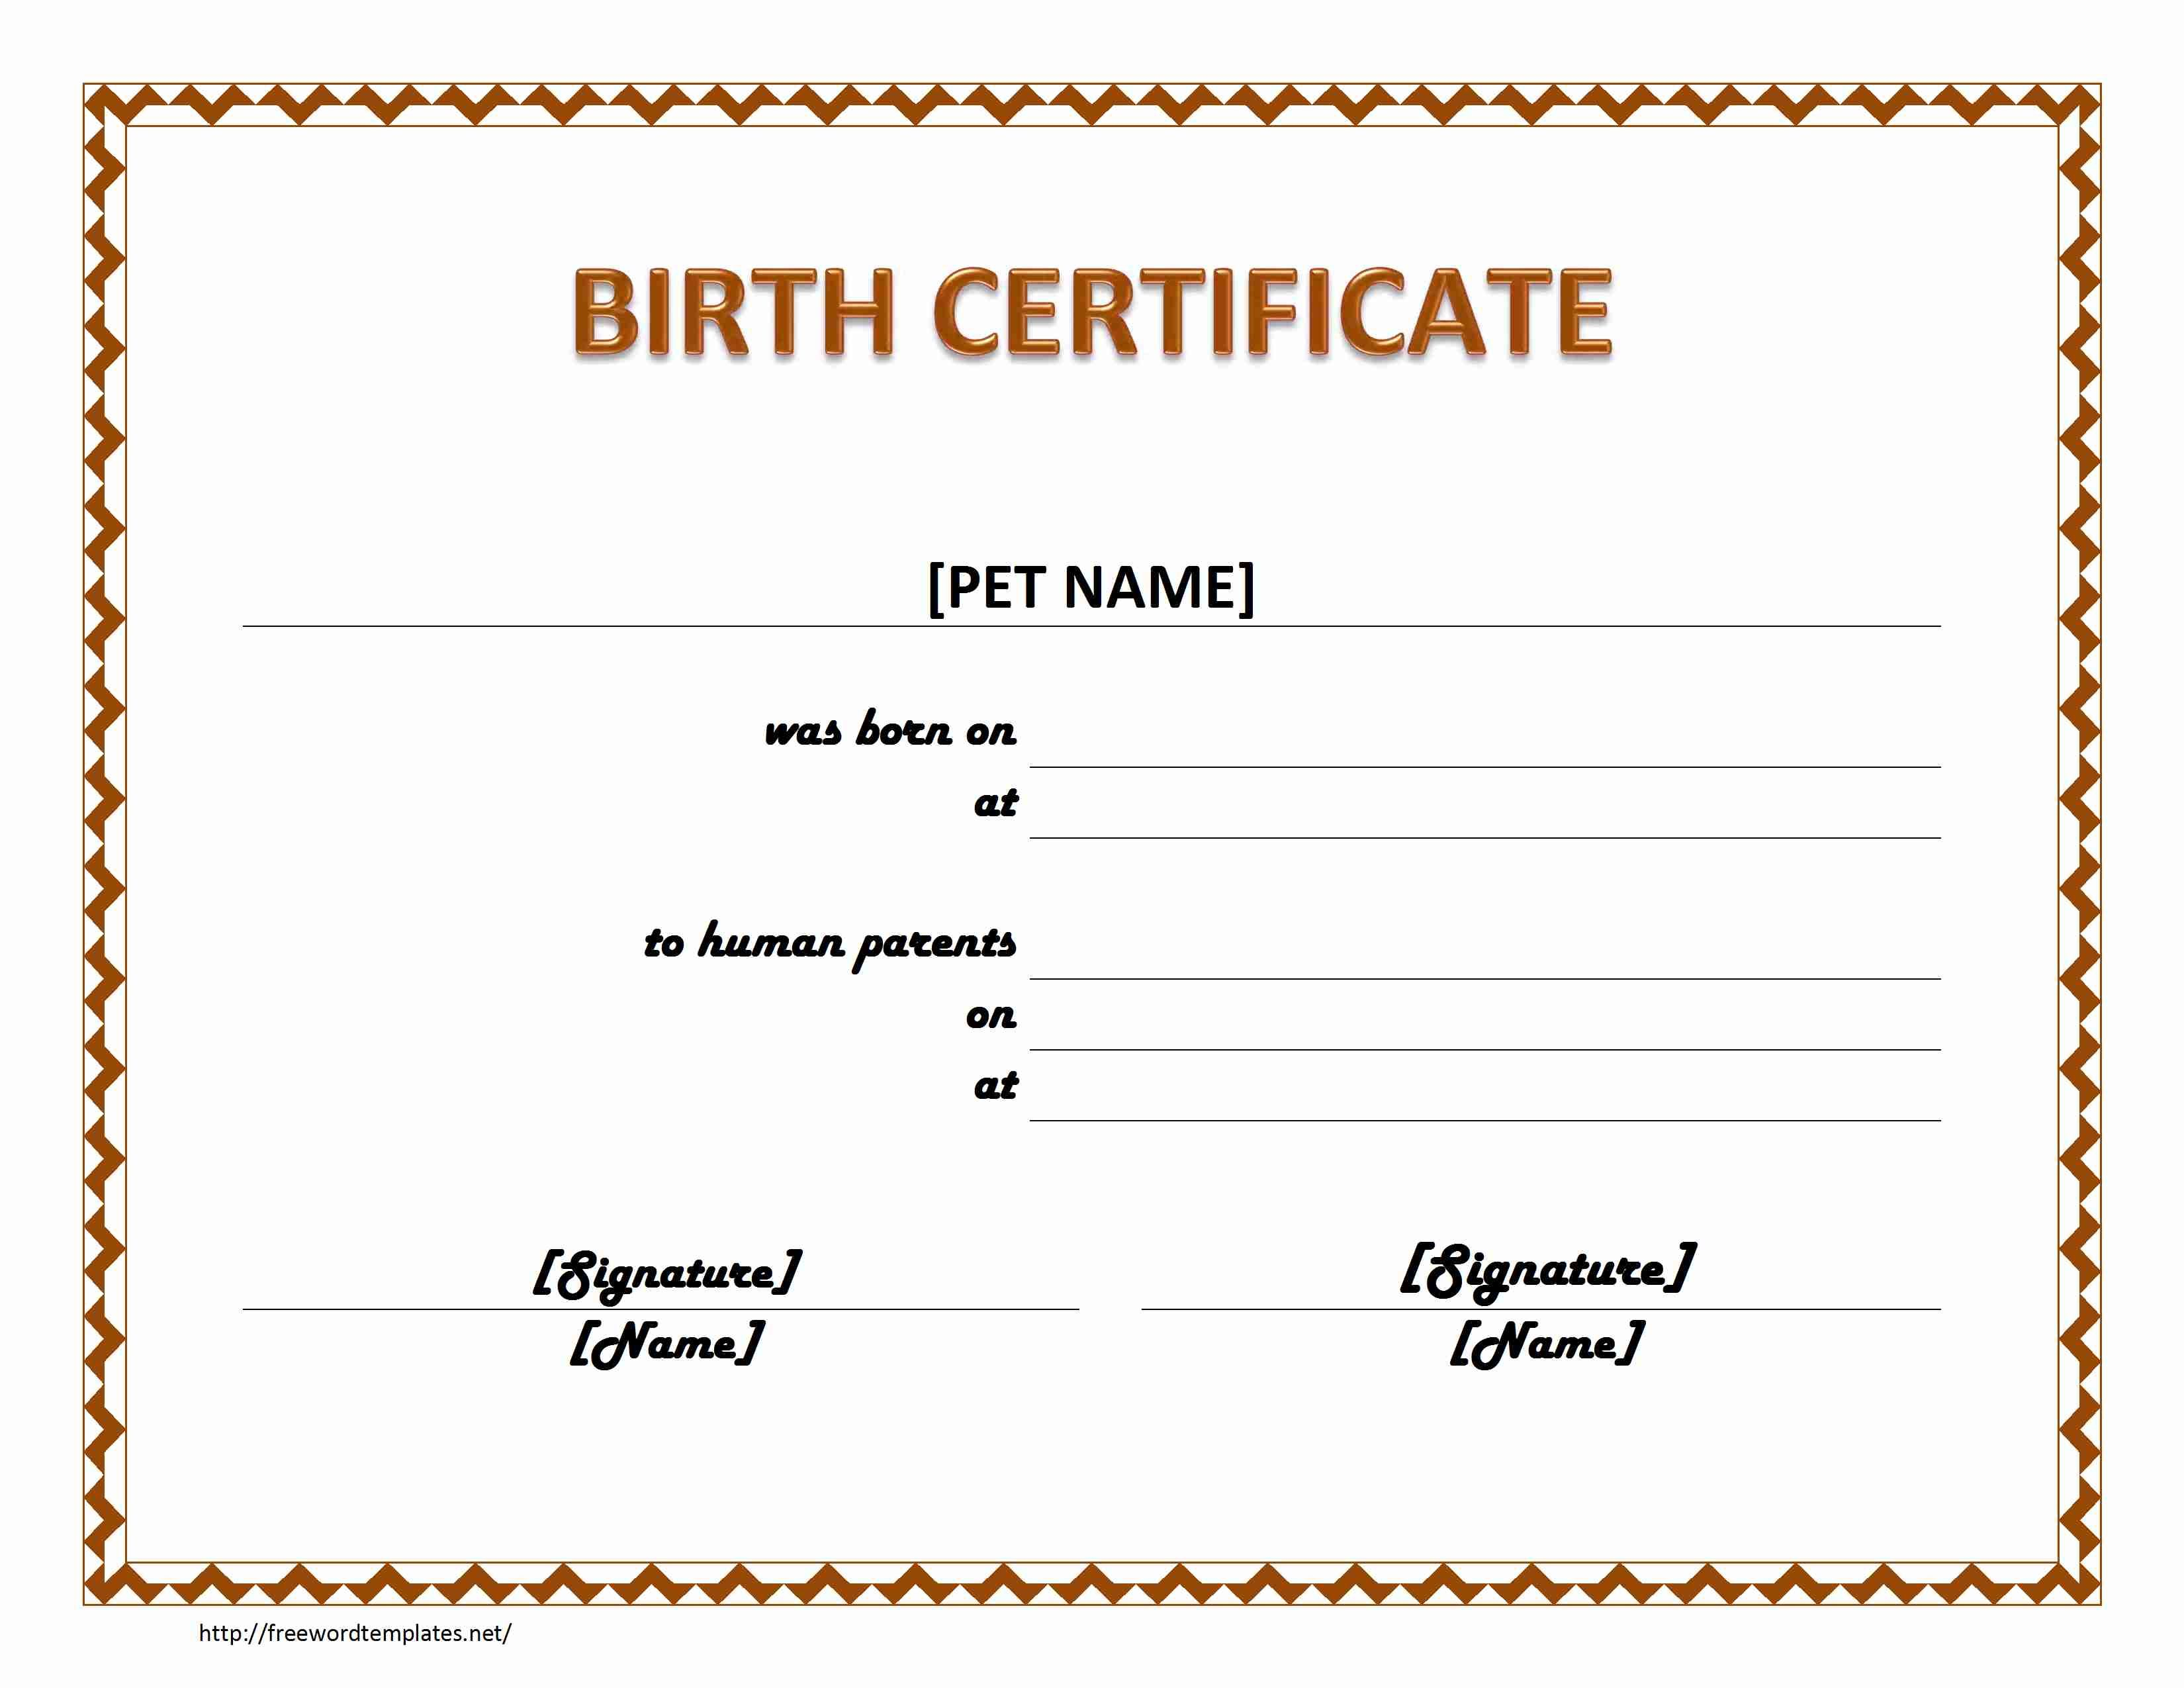 Pet Birth Certificate Maker | Pet Birth Certificate For Word In Fake Birth Certificate Template